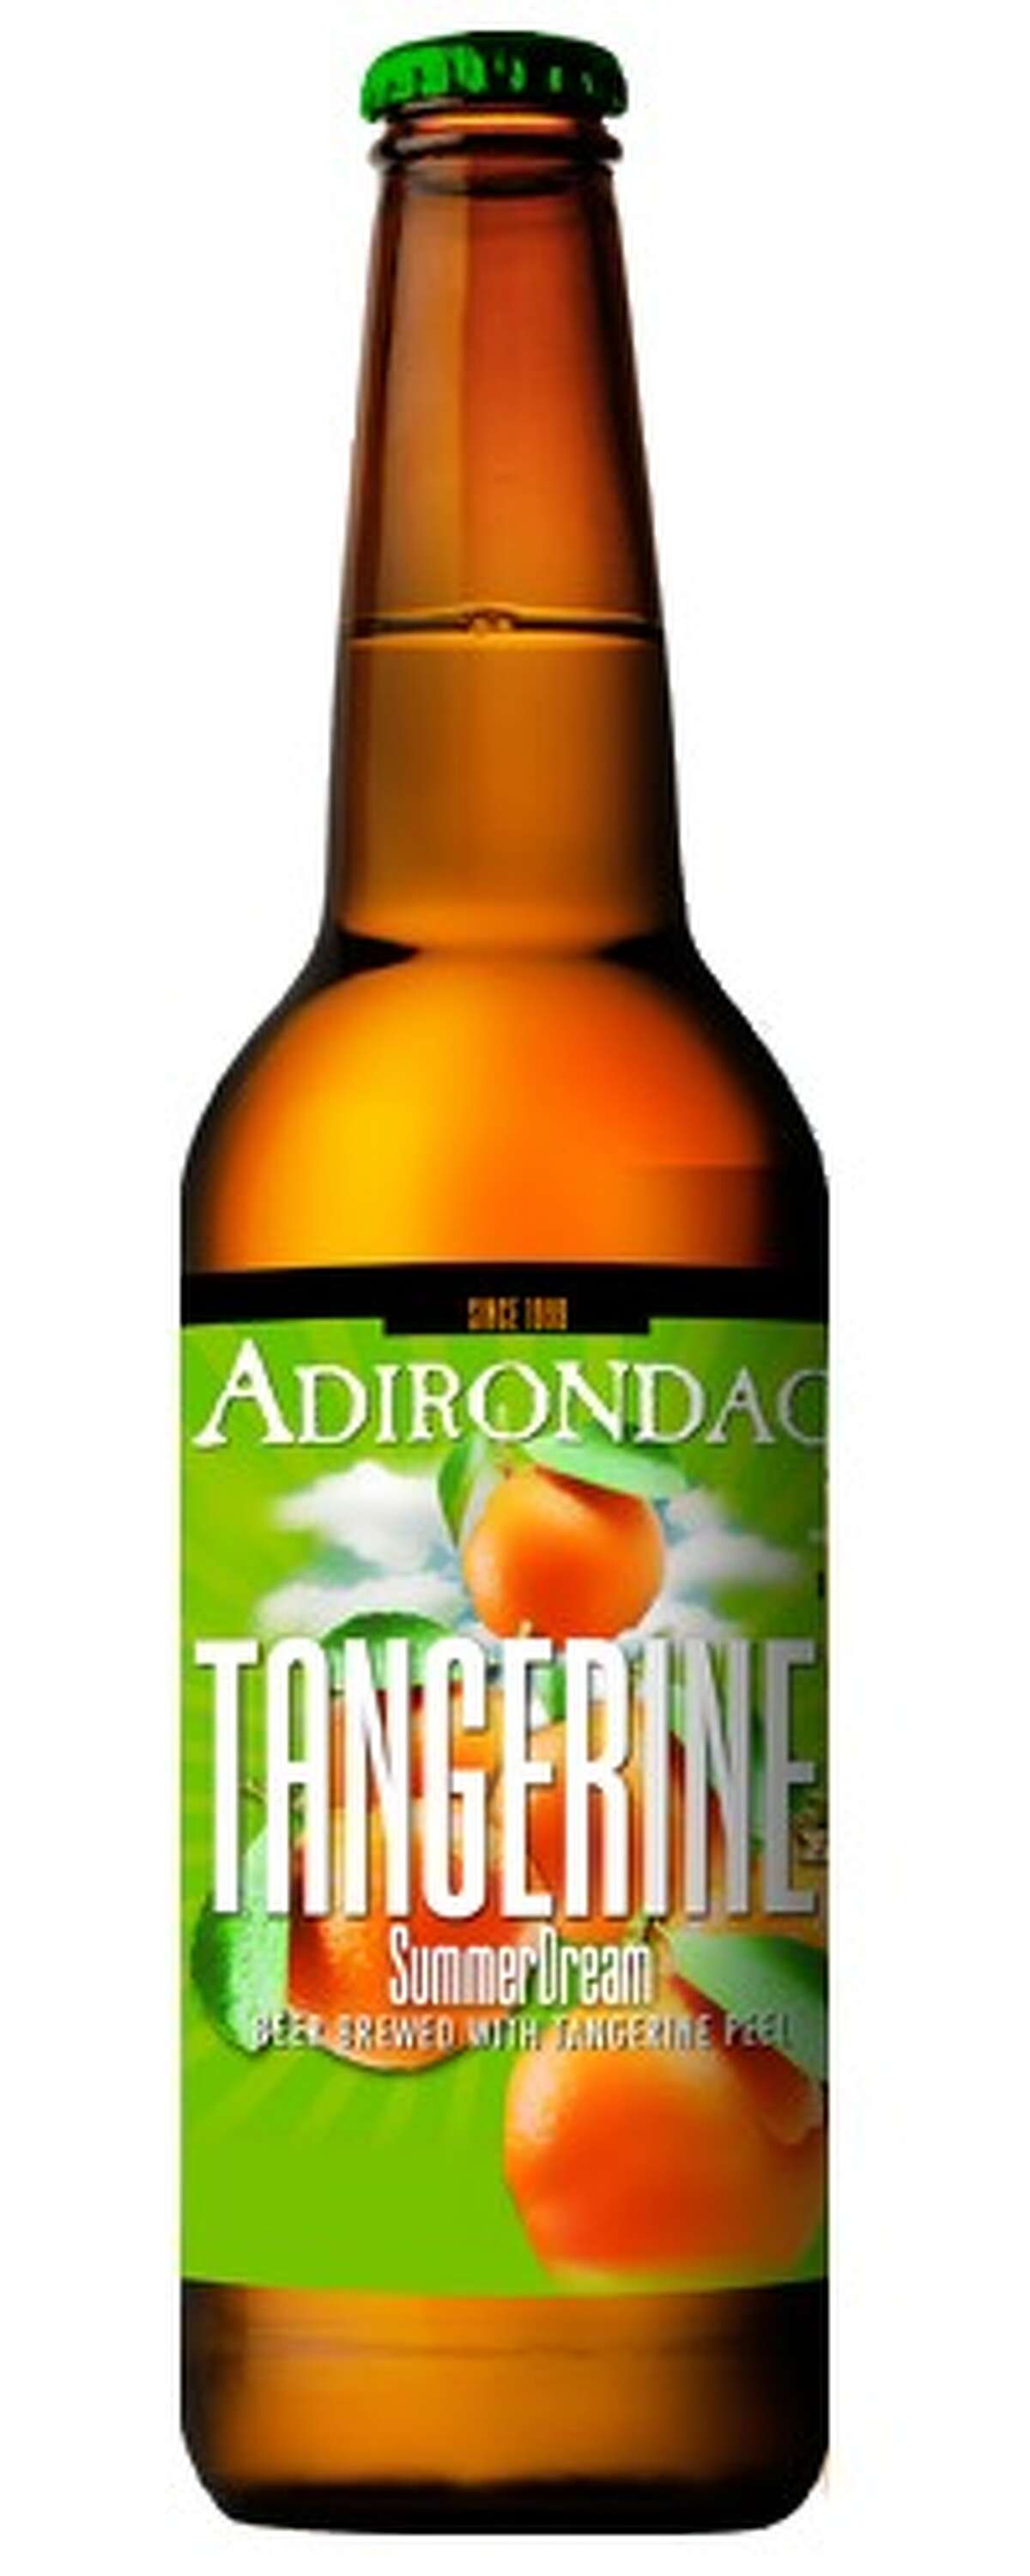 ADK Tangerine Dream, a seasonal brew by the Adirondack Pub & Brewery in Lake George. (Provided)